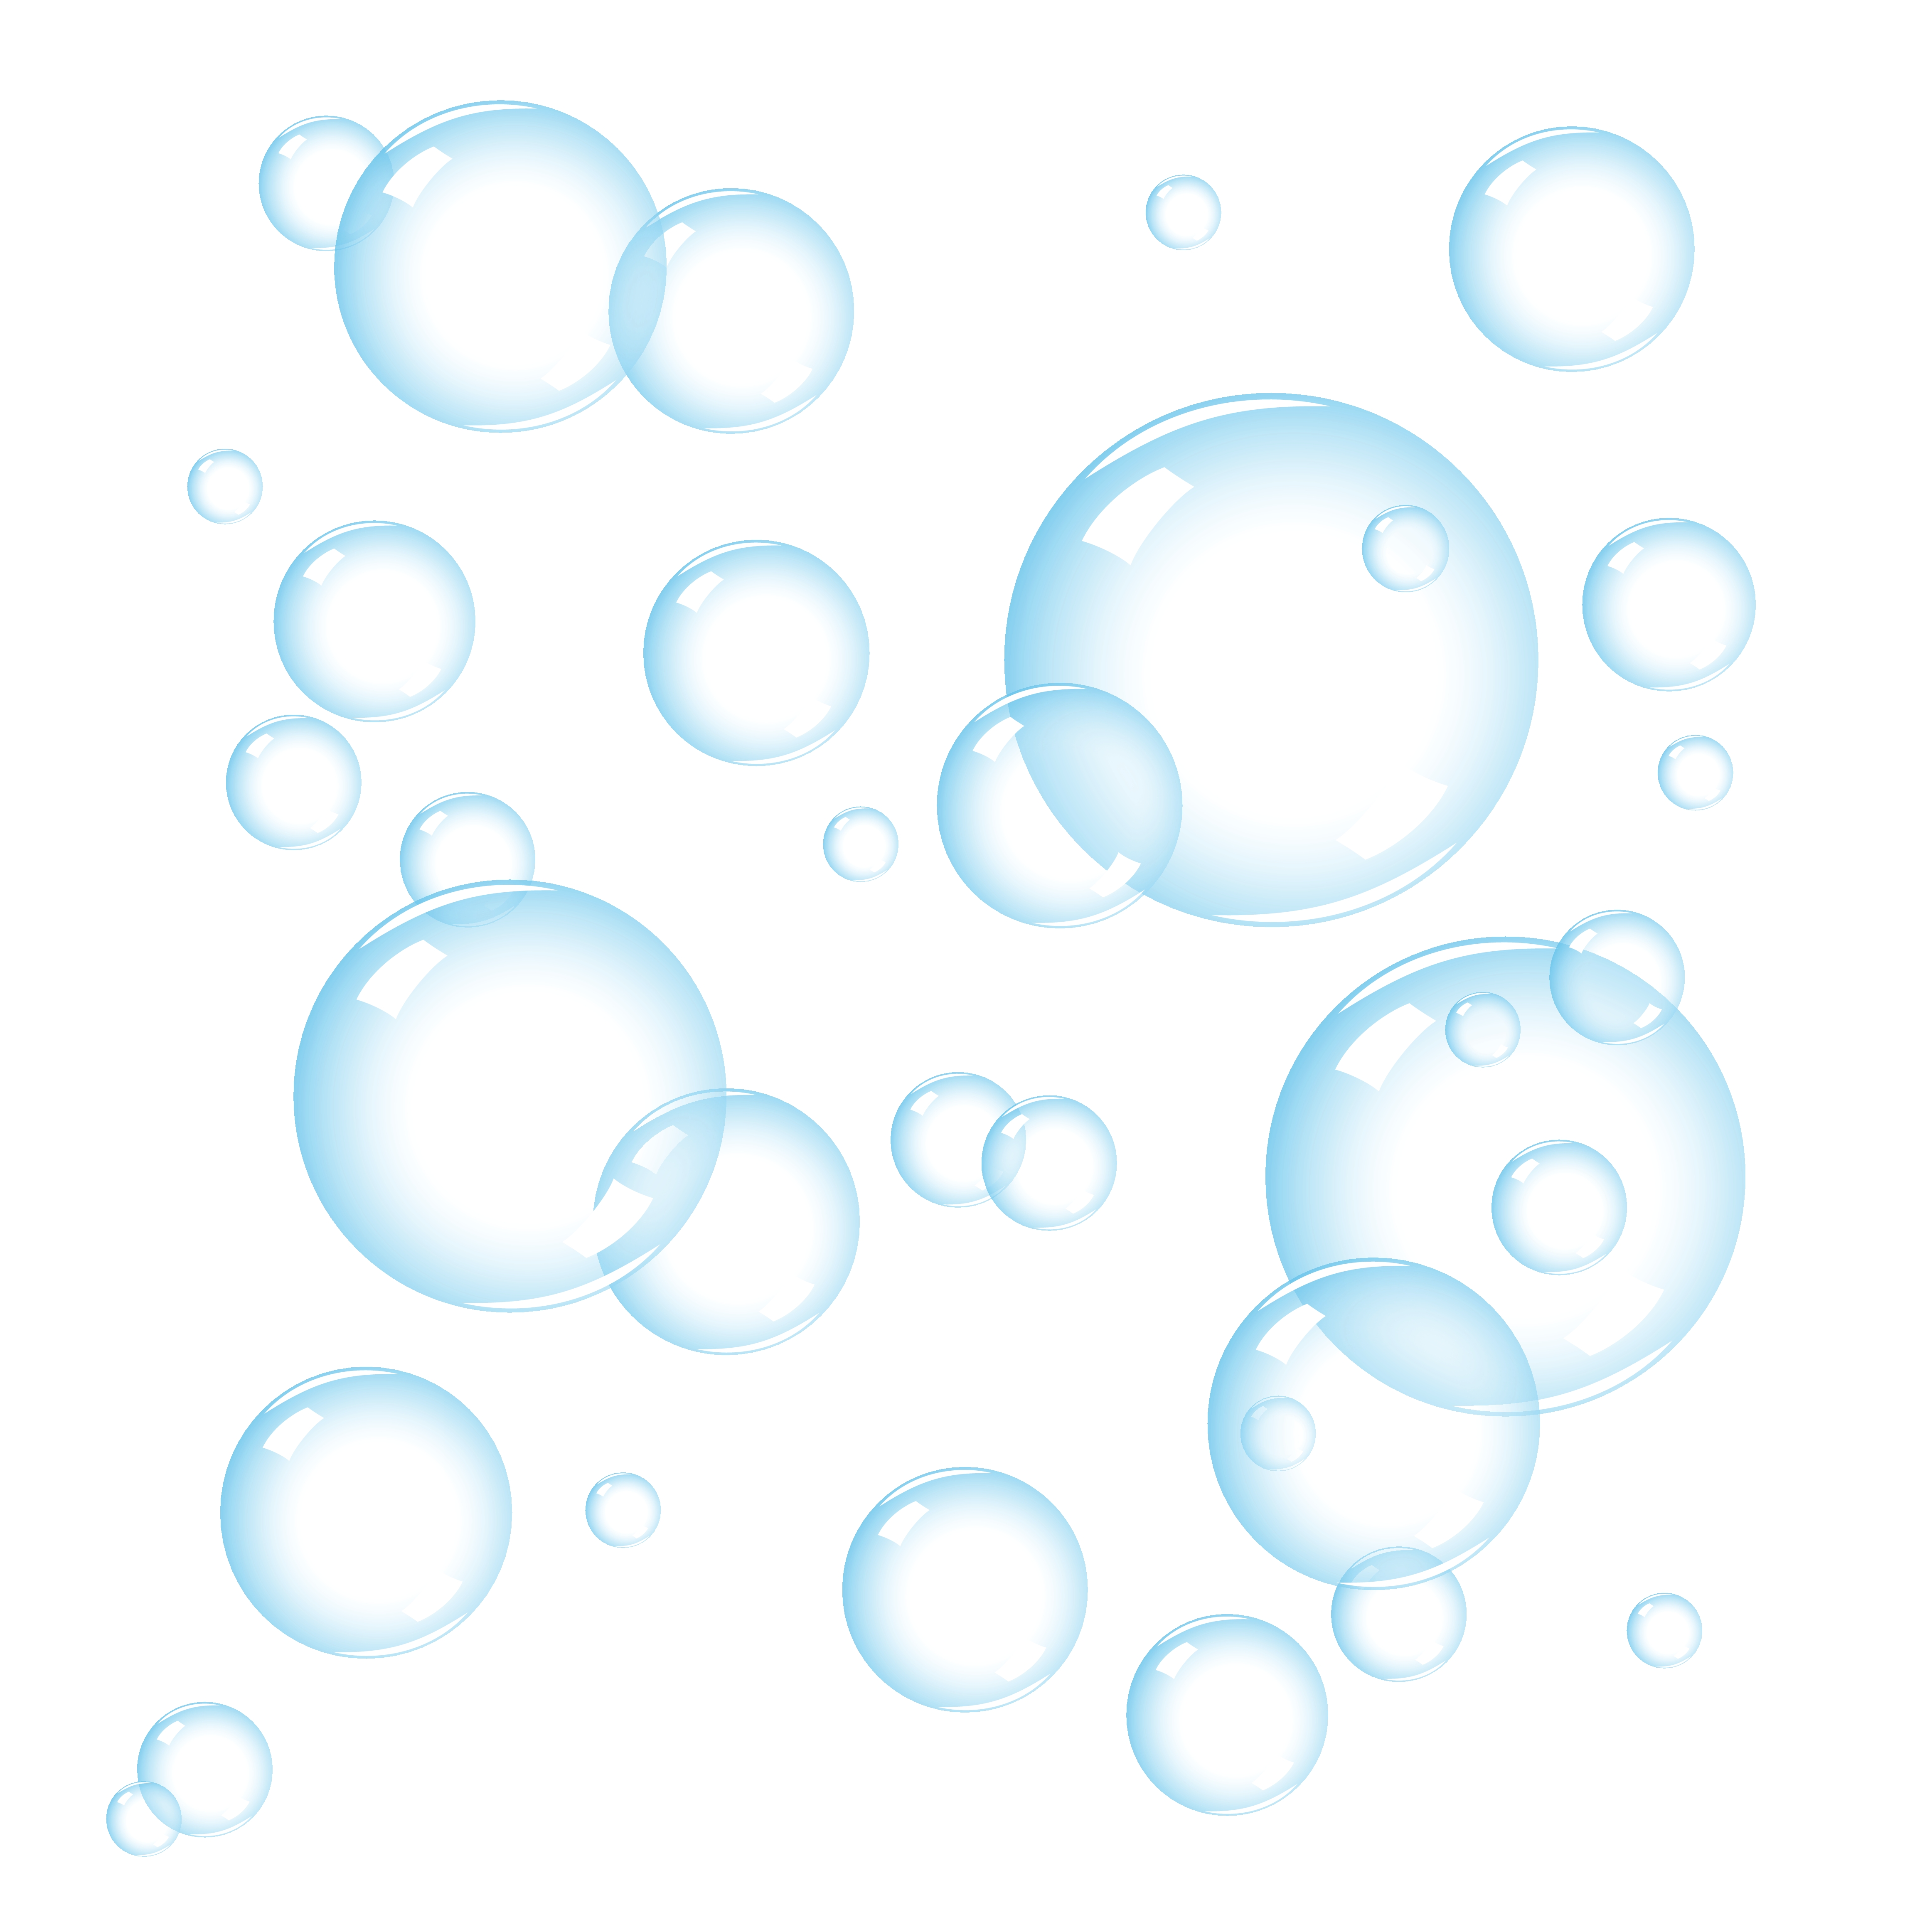 Bubbles clipart bubbly. Free cliparts download clip